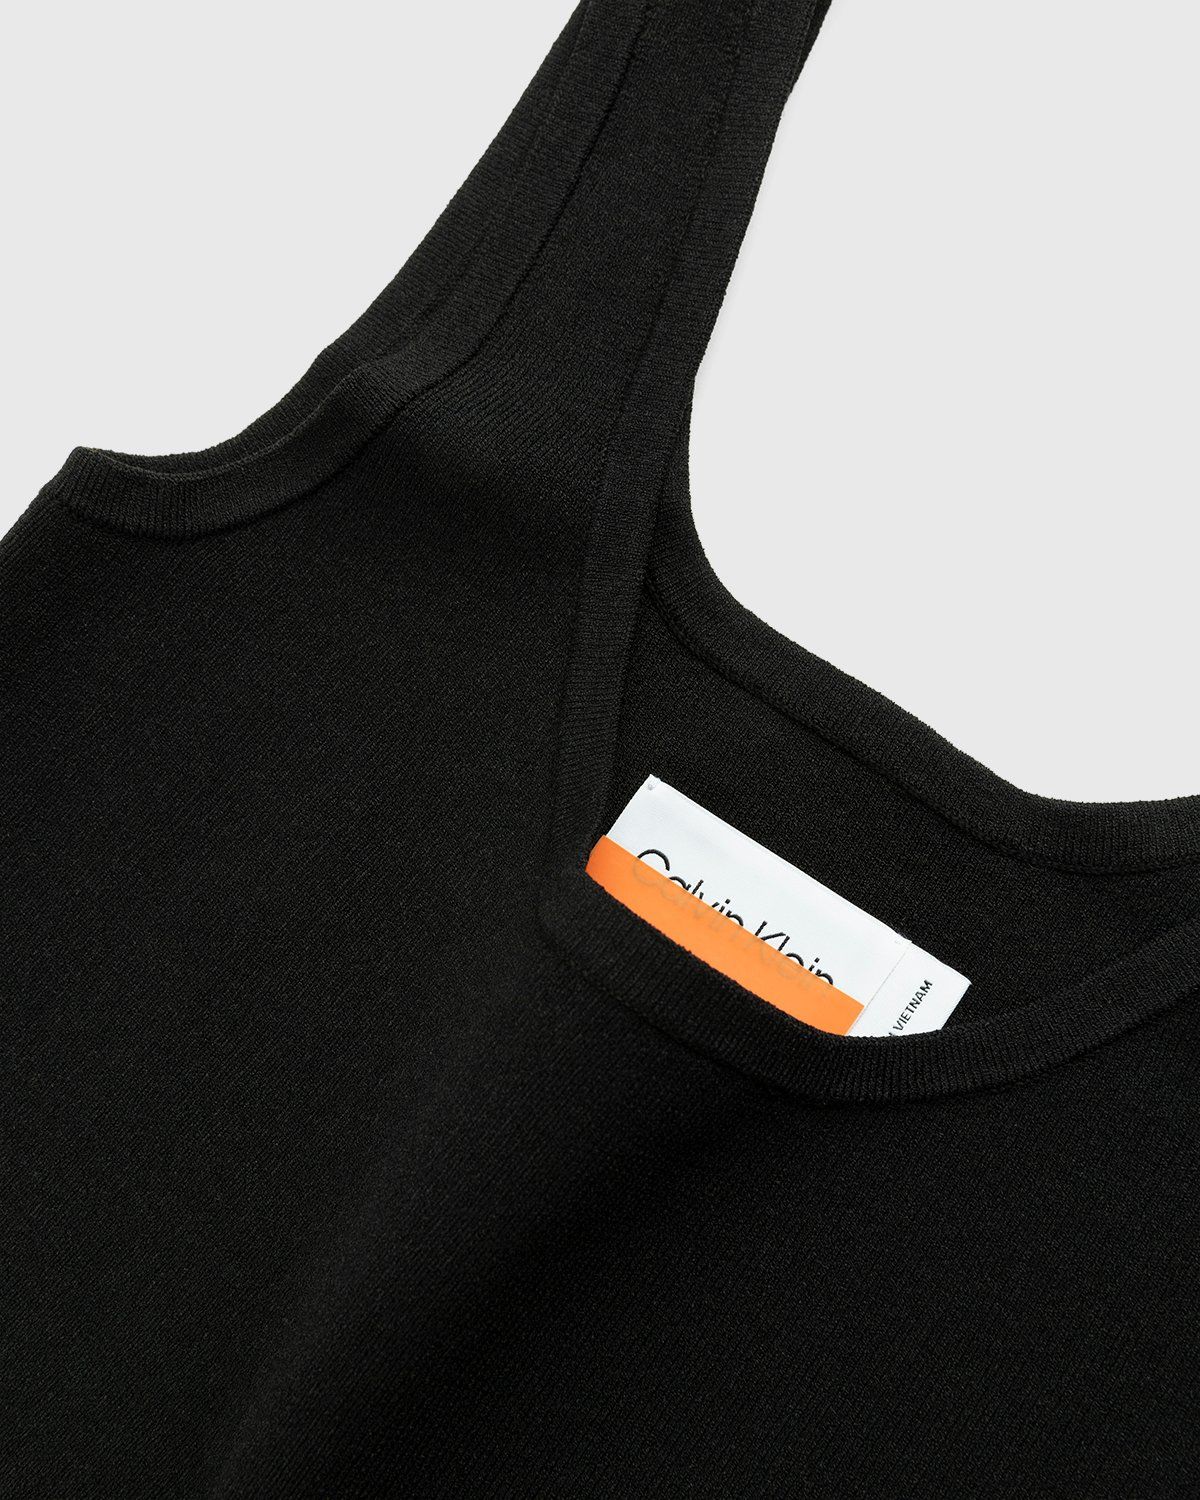 Heron Preston x Calvin Klein – Womens Tank Dress Black | Highsnobiety Shop